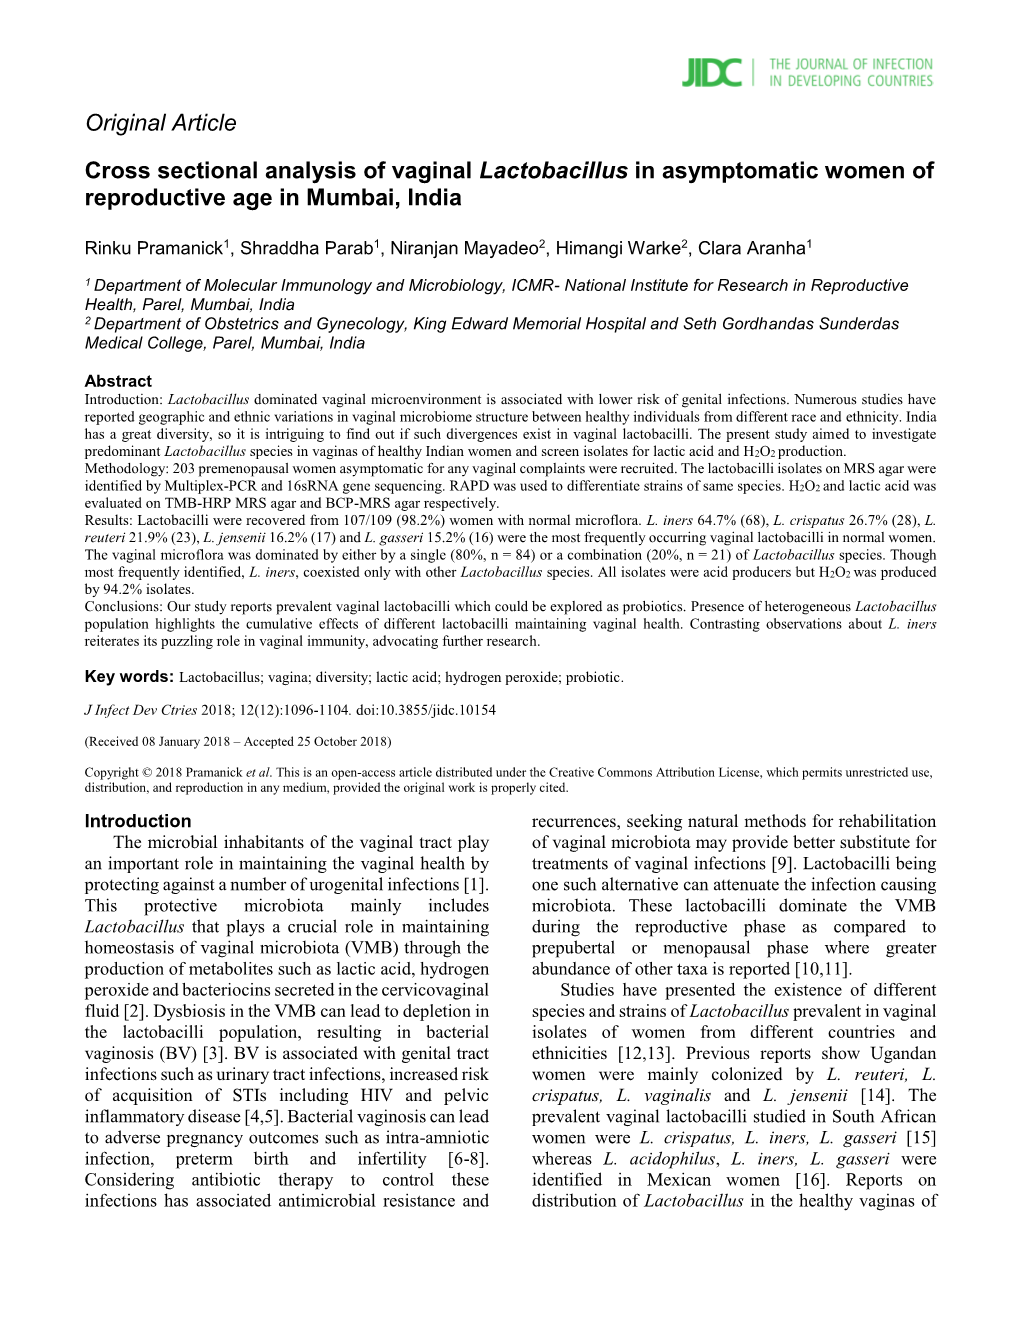 Original Article Cross Sectional Analysis of Vaginal Lactobacillus In